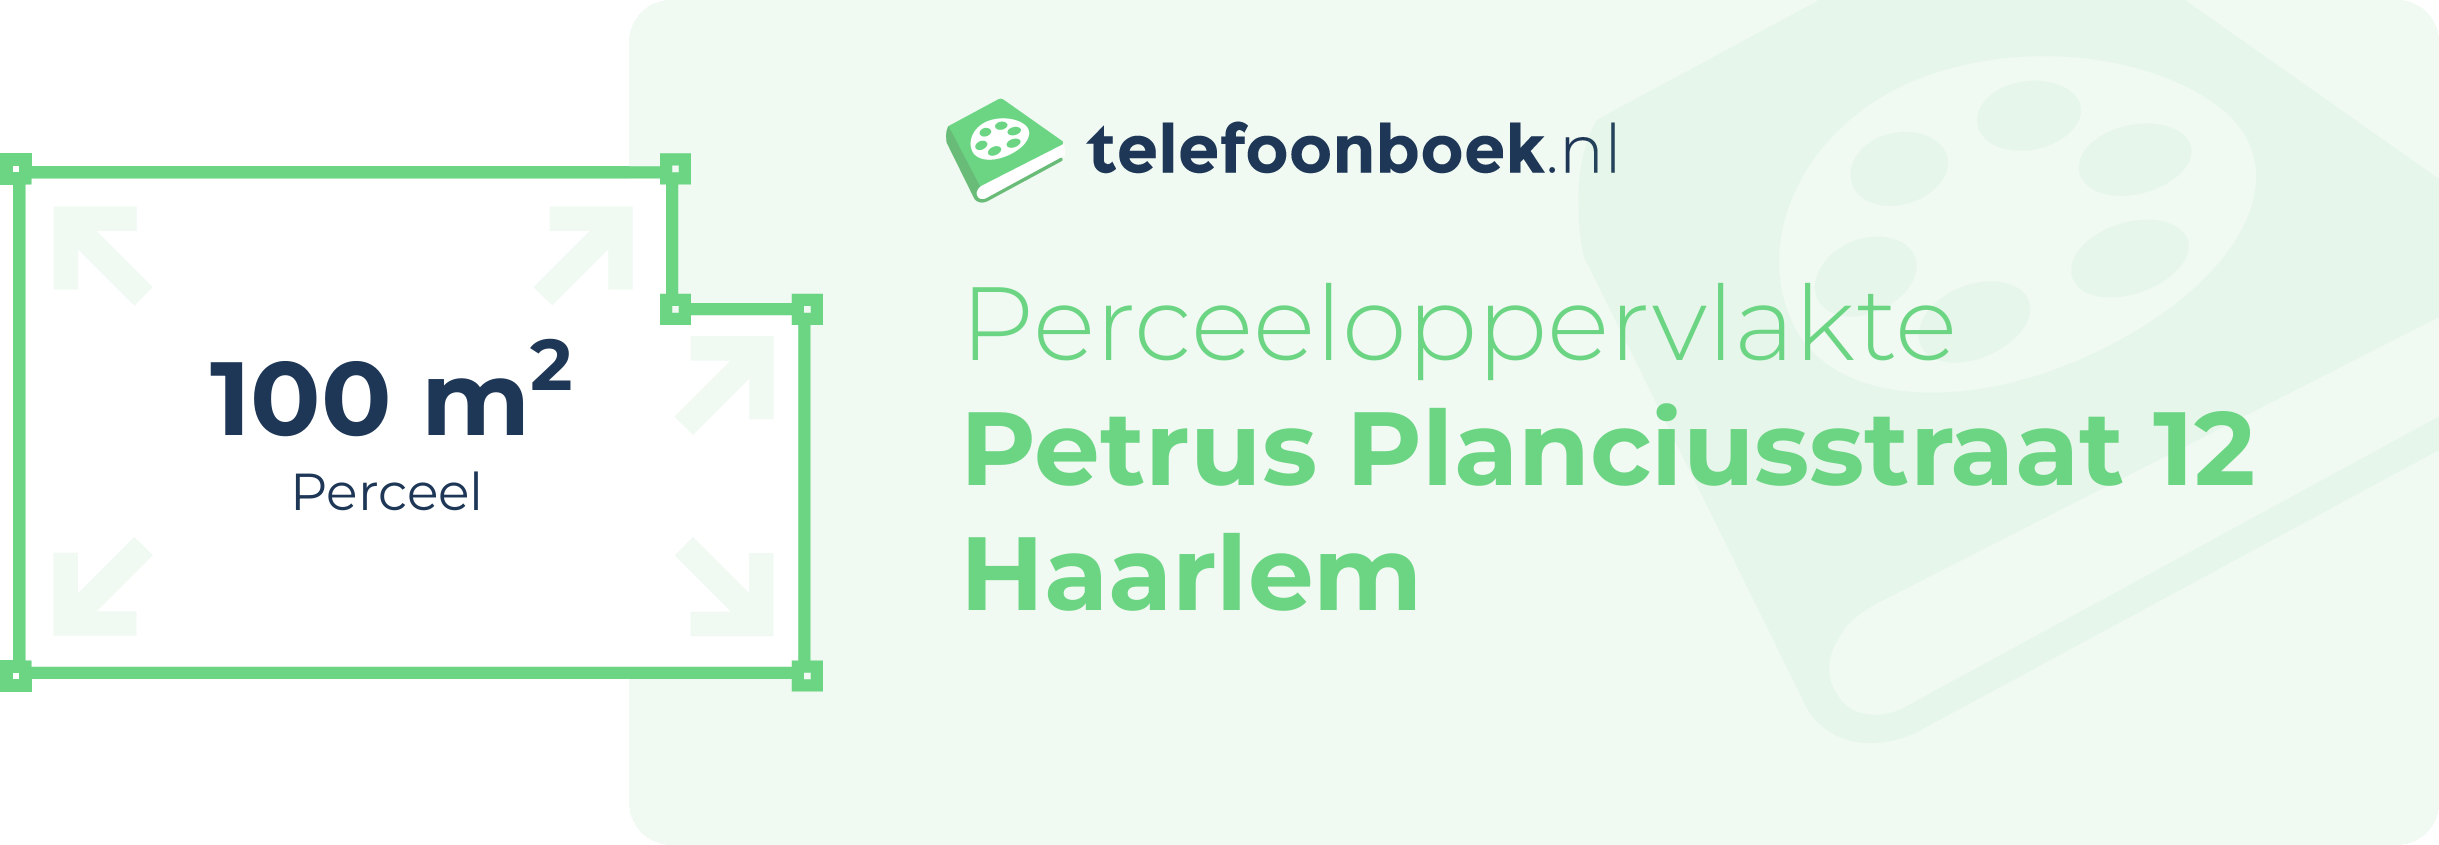 Perceeloppervlakte Petrus Planciusstraat 12 Haarlem